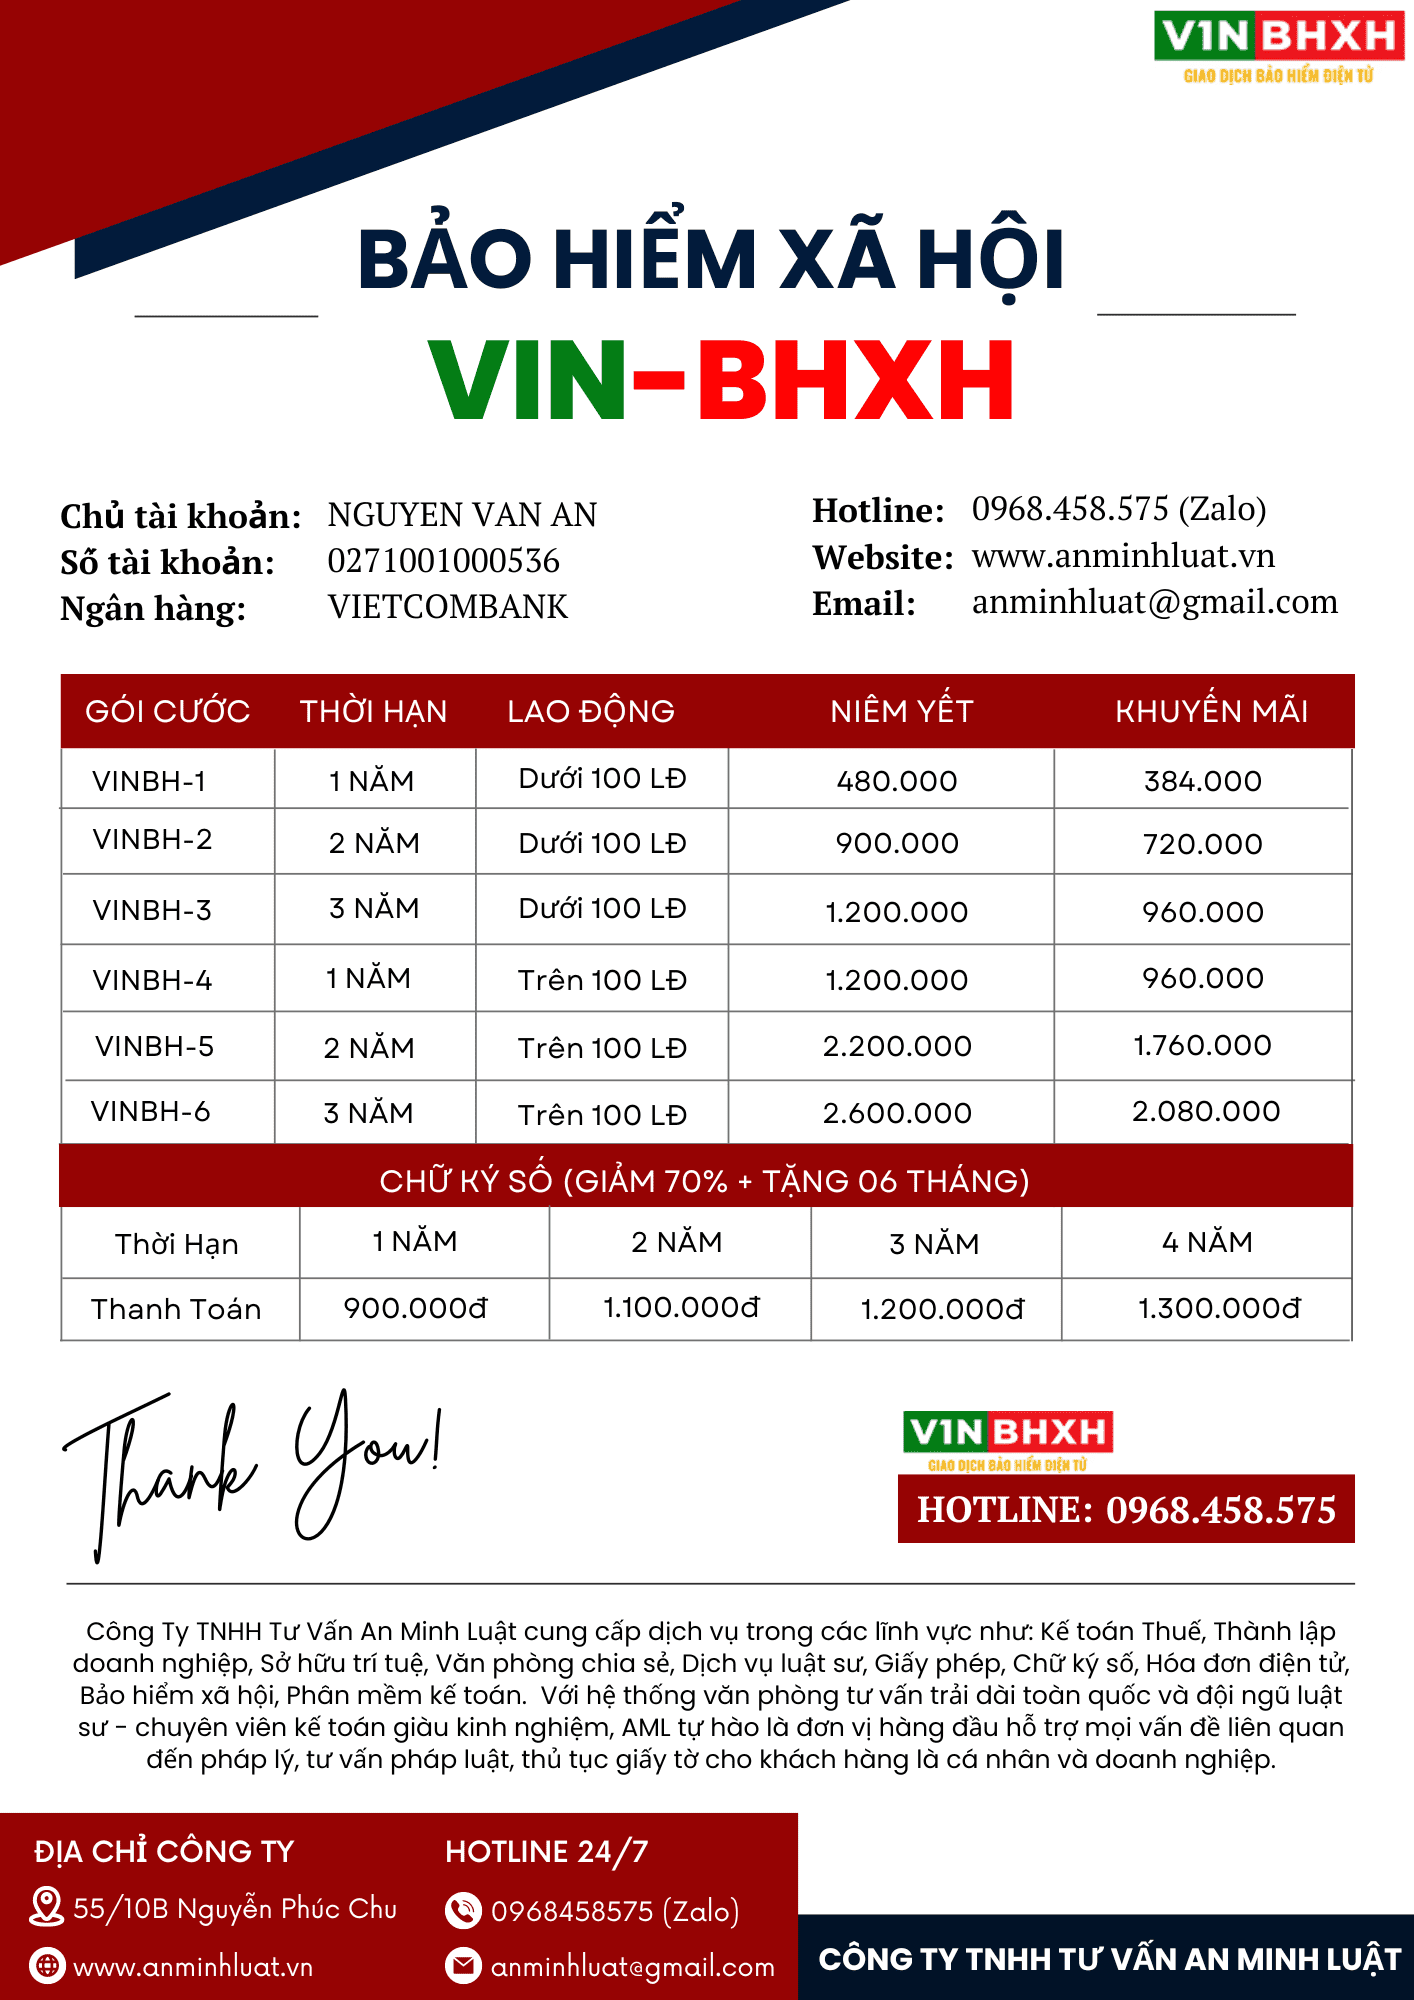 Phần mềm kê khai BHXH Vin-BHXH